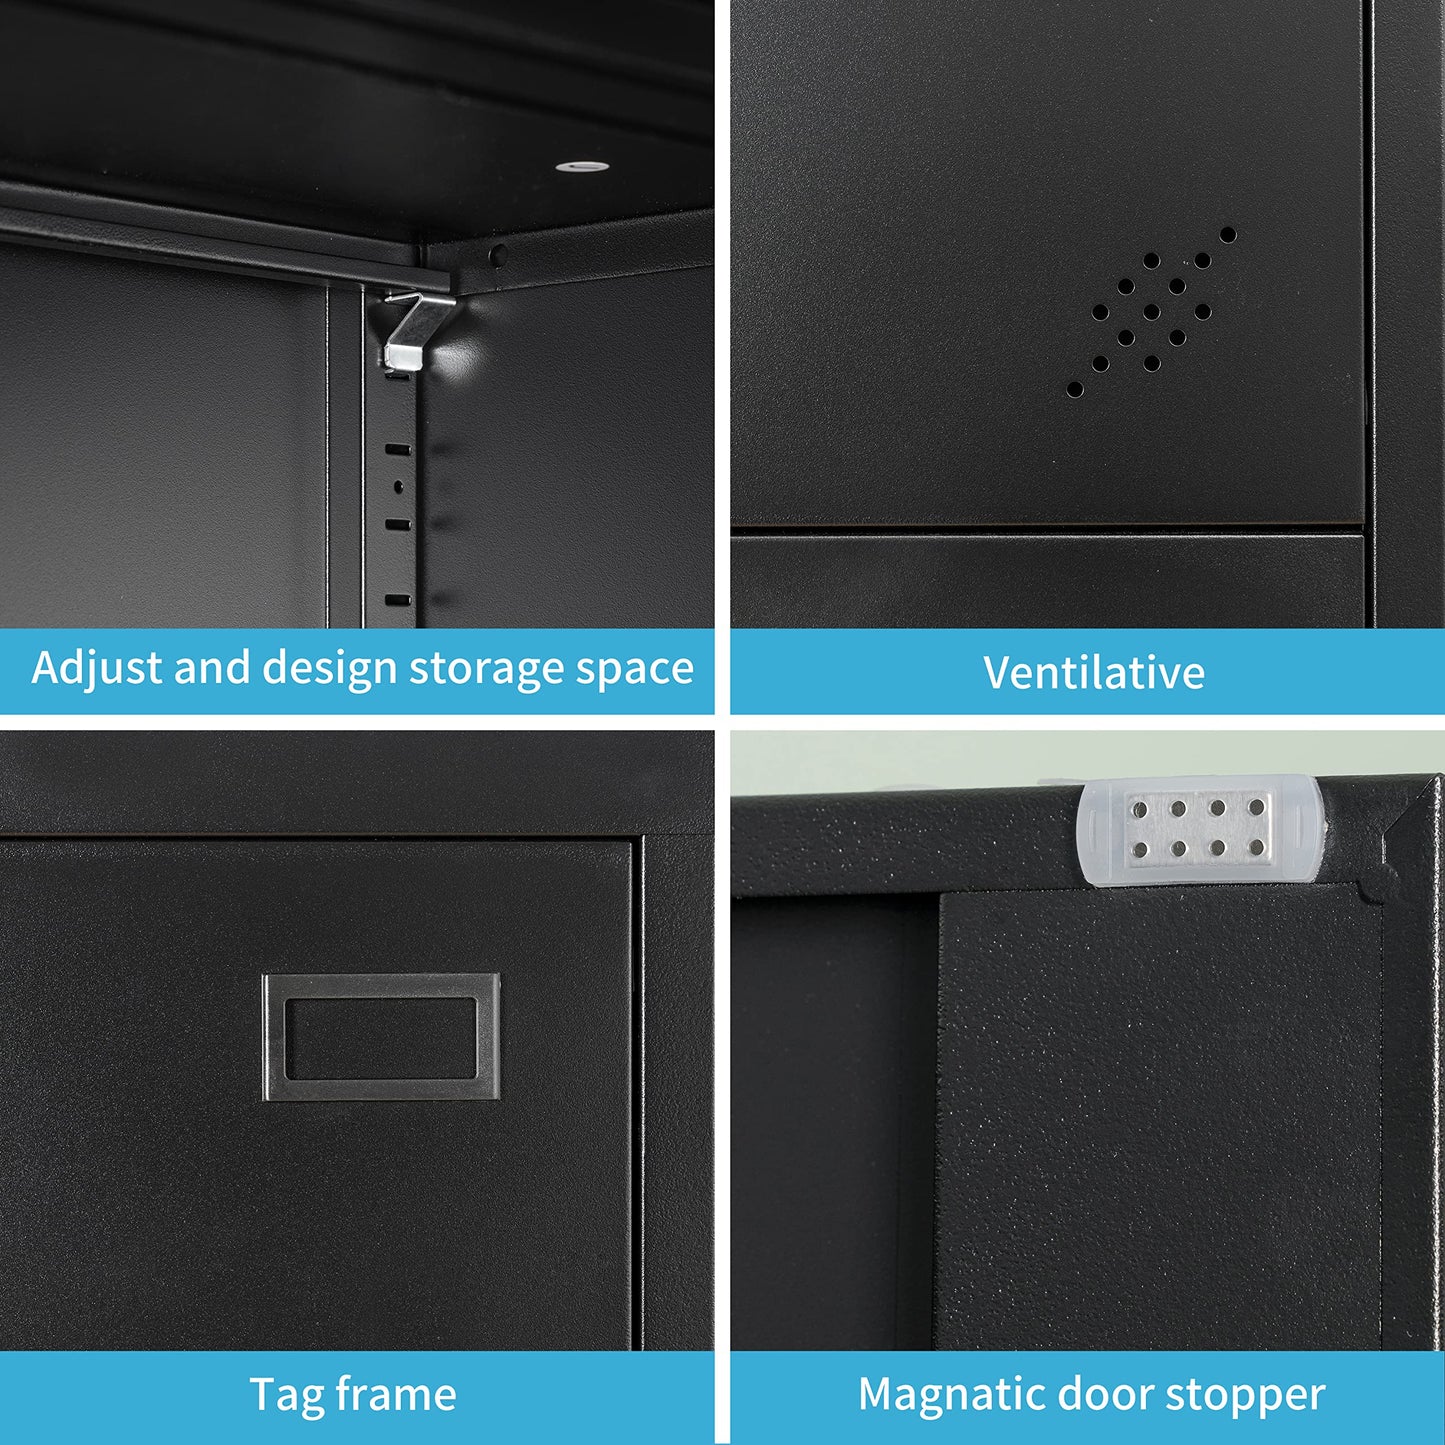 Metal Garage Storage Cabinet - 72" Locking Metal Cabinet with 2 Doors and Adjustable Shelves & Locking Doors for Tool Storage - Black